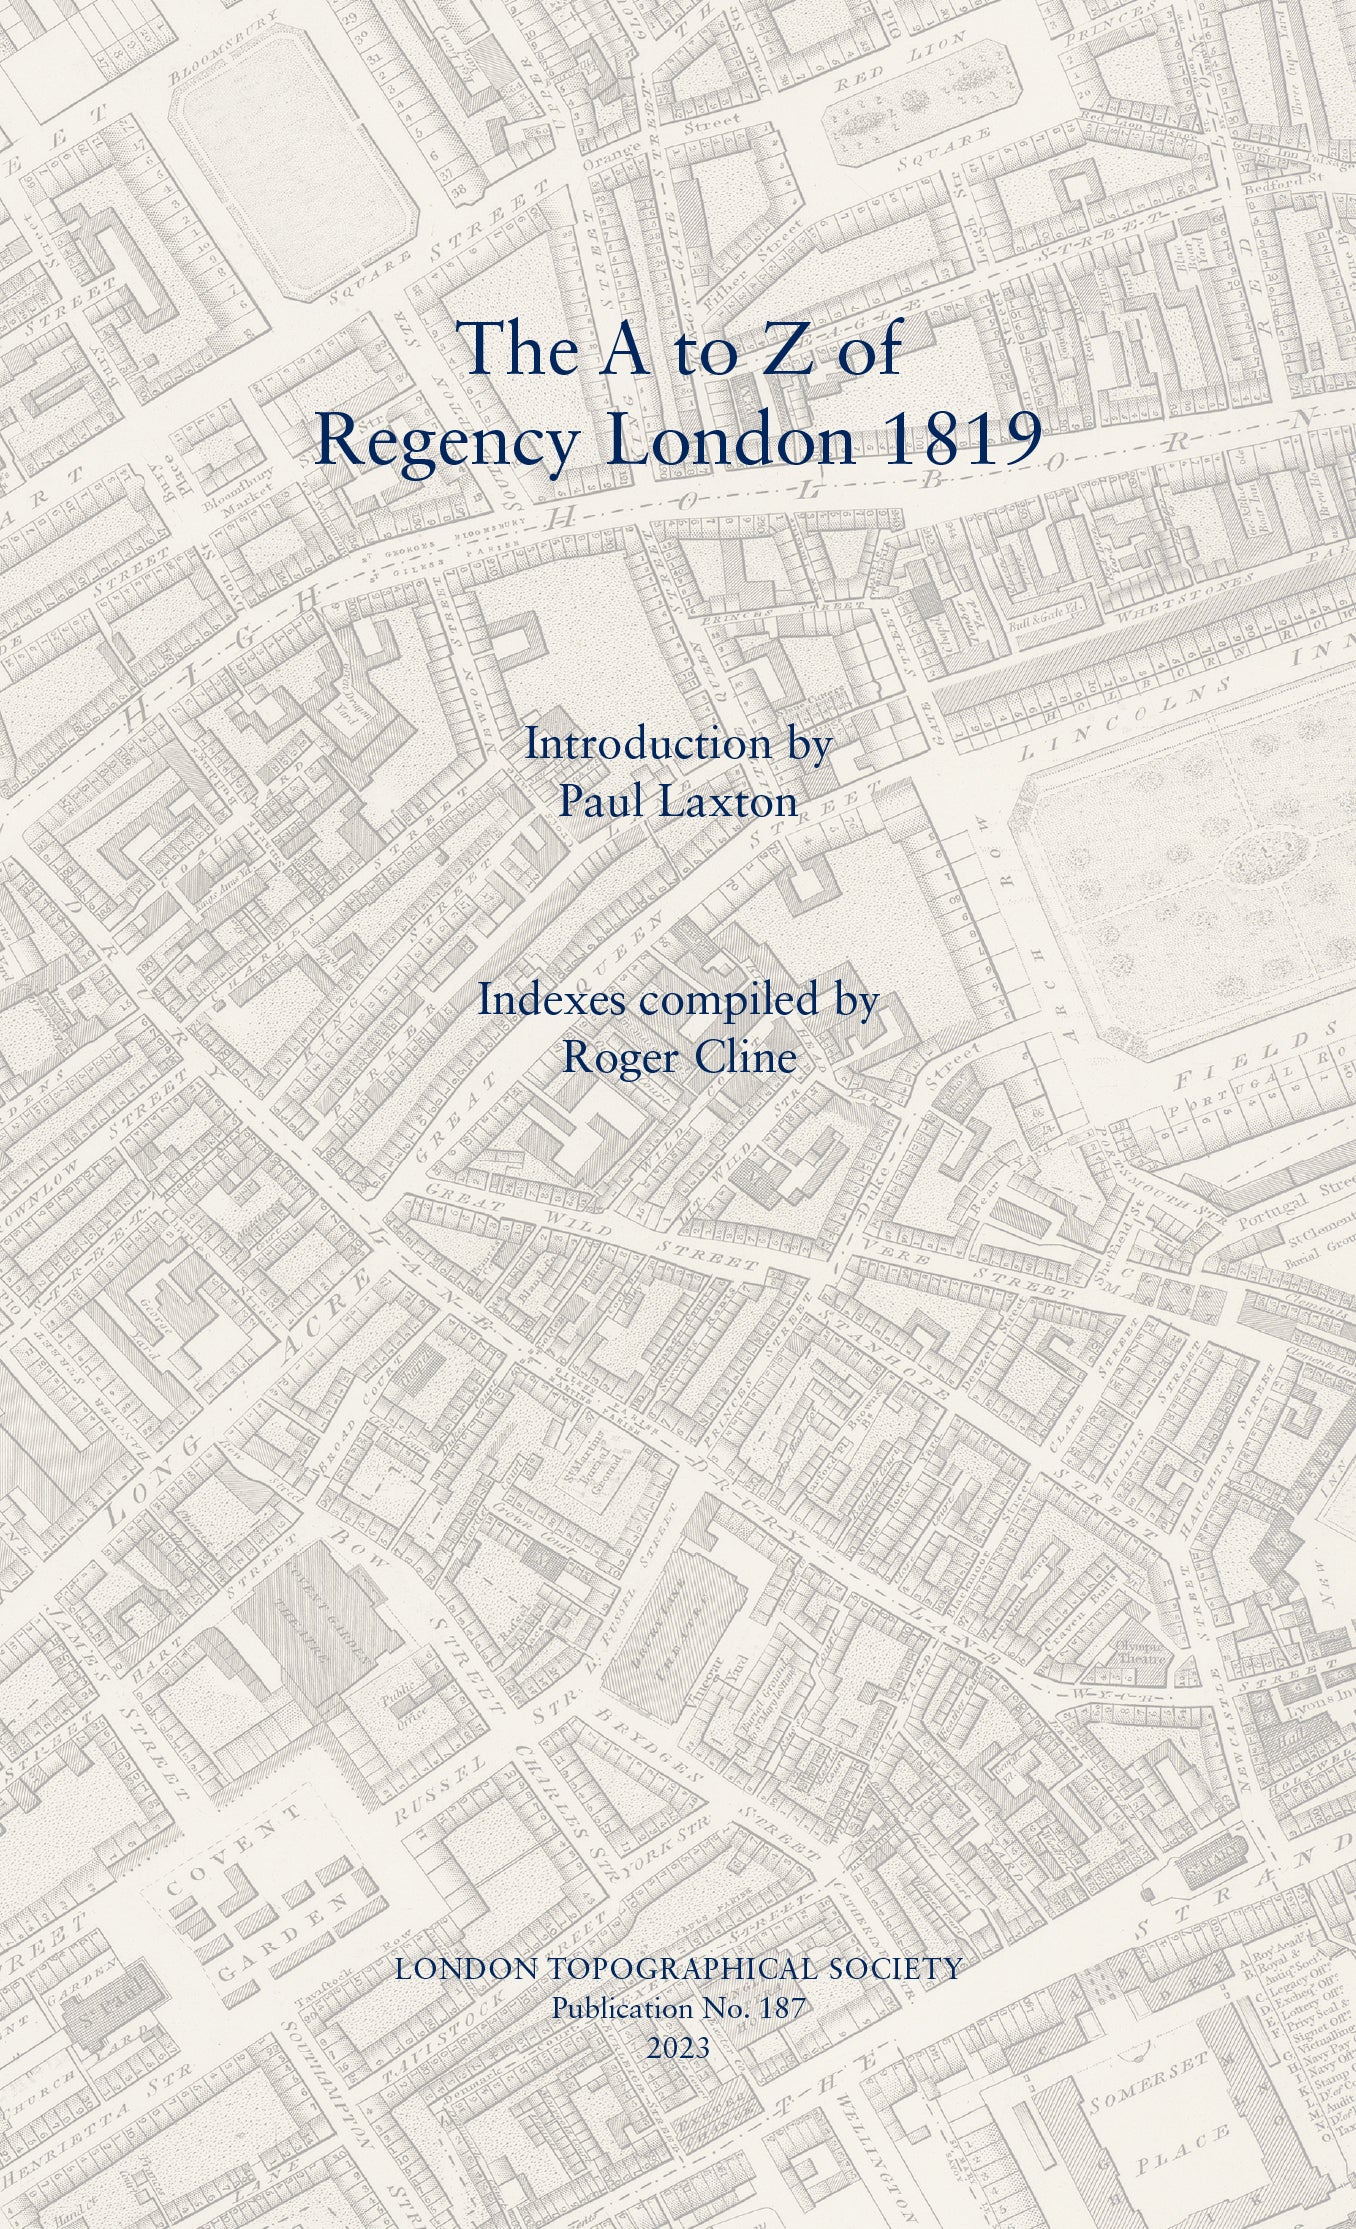 Cover Image A to Z Regency London